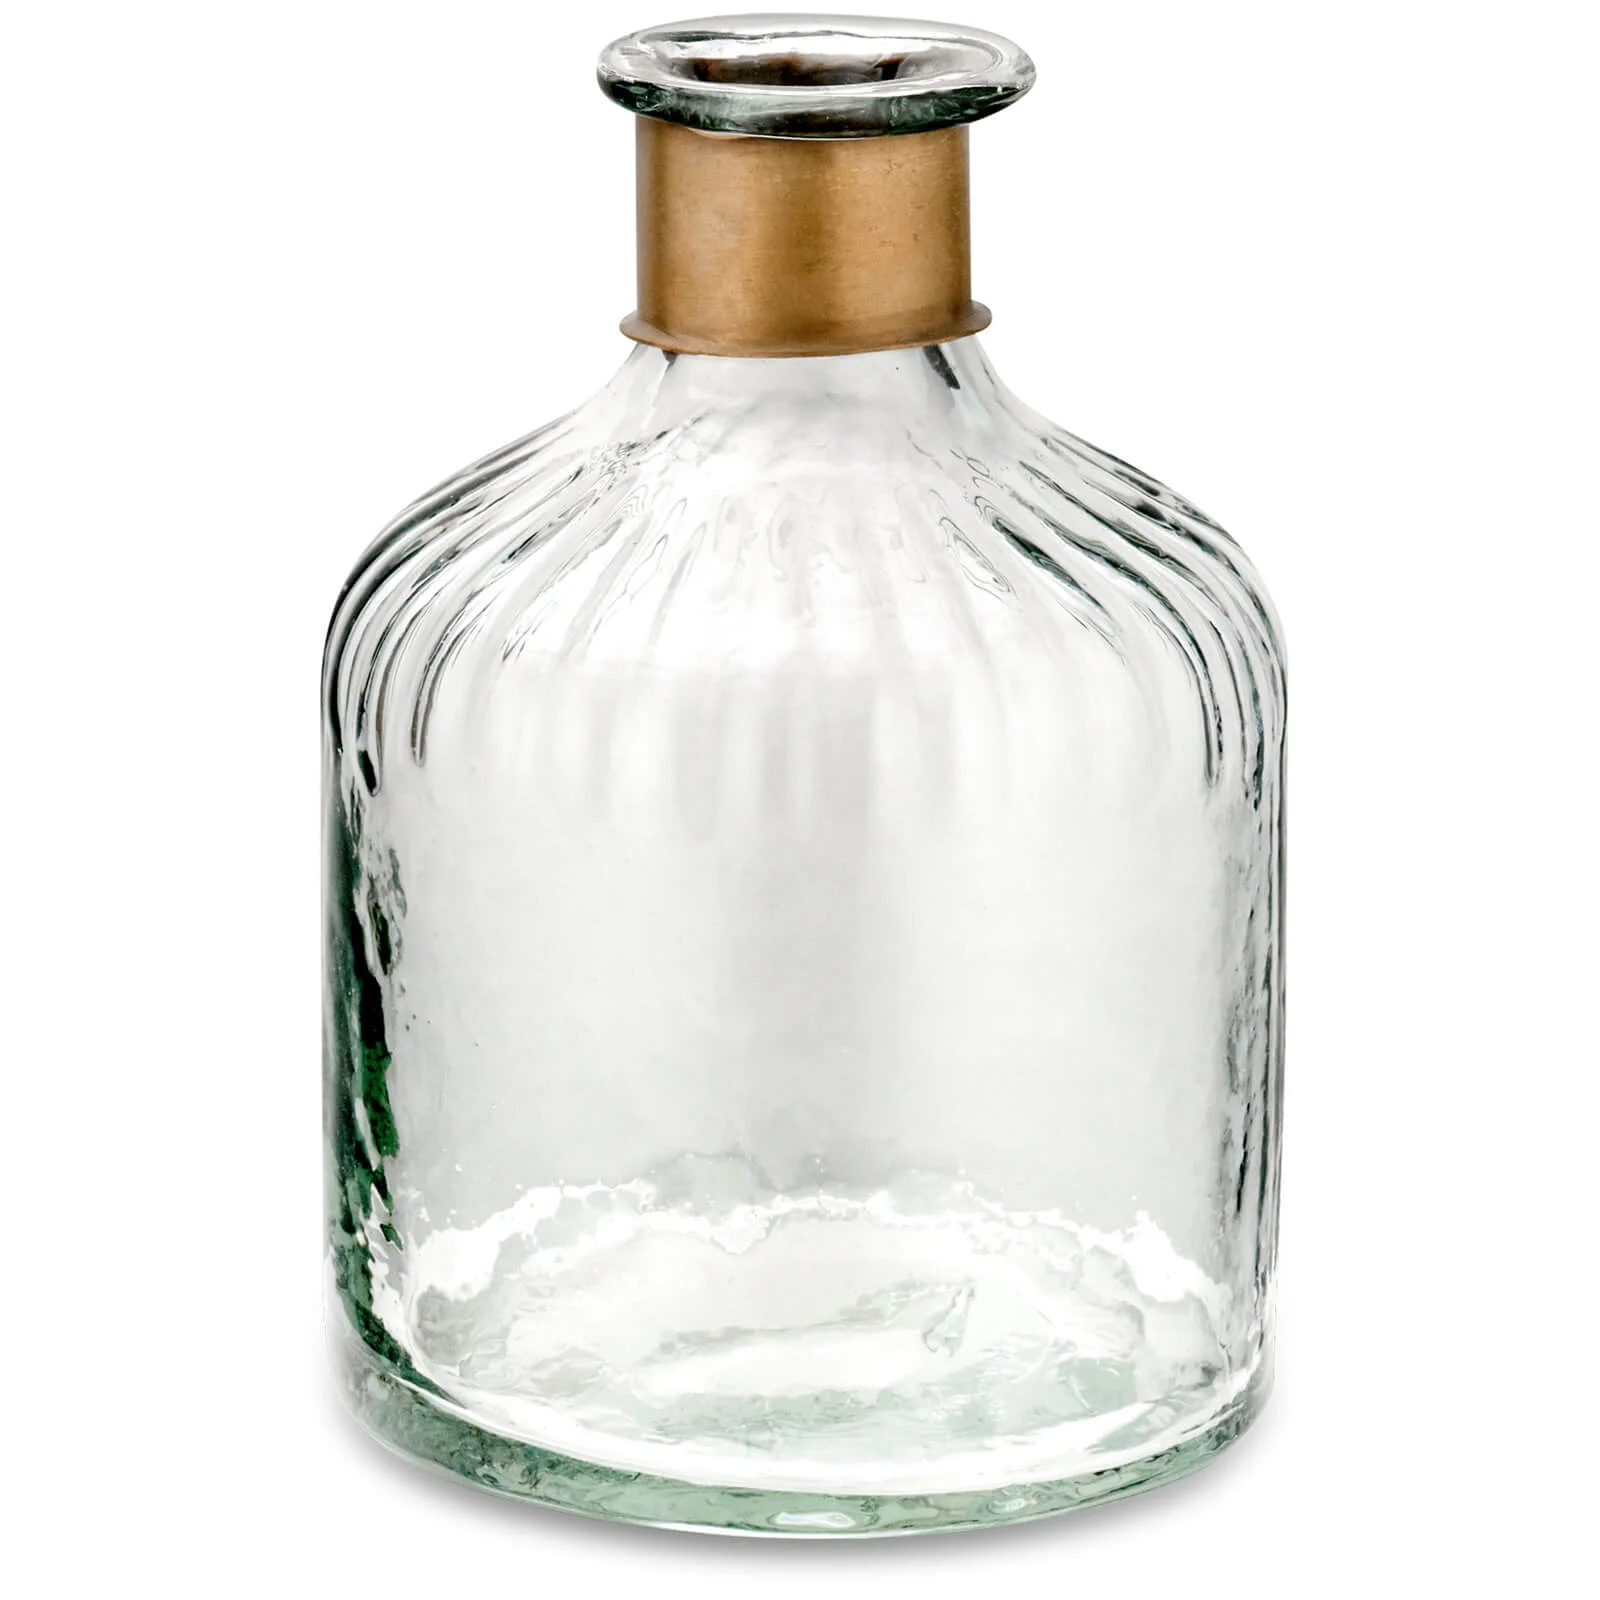 Nkuku Chara Hammered Bottle - Clear Glass & Antique Brass - 15cm Image 1